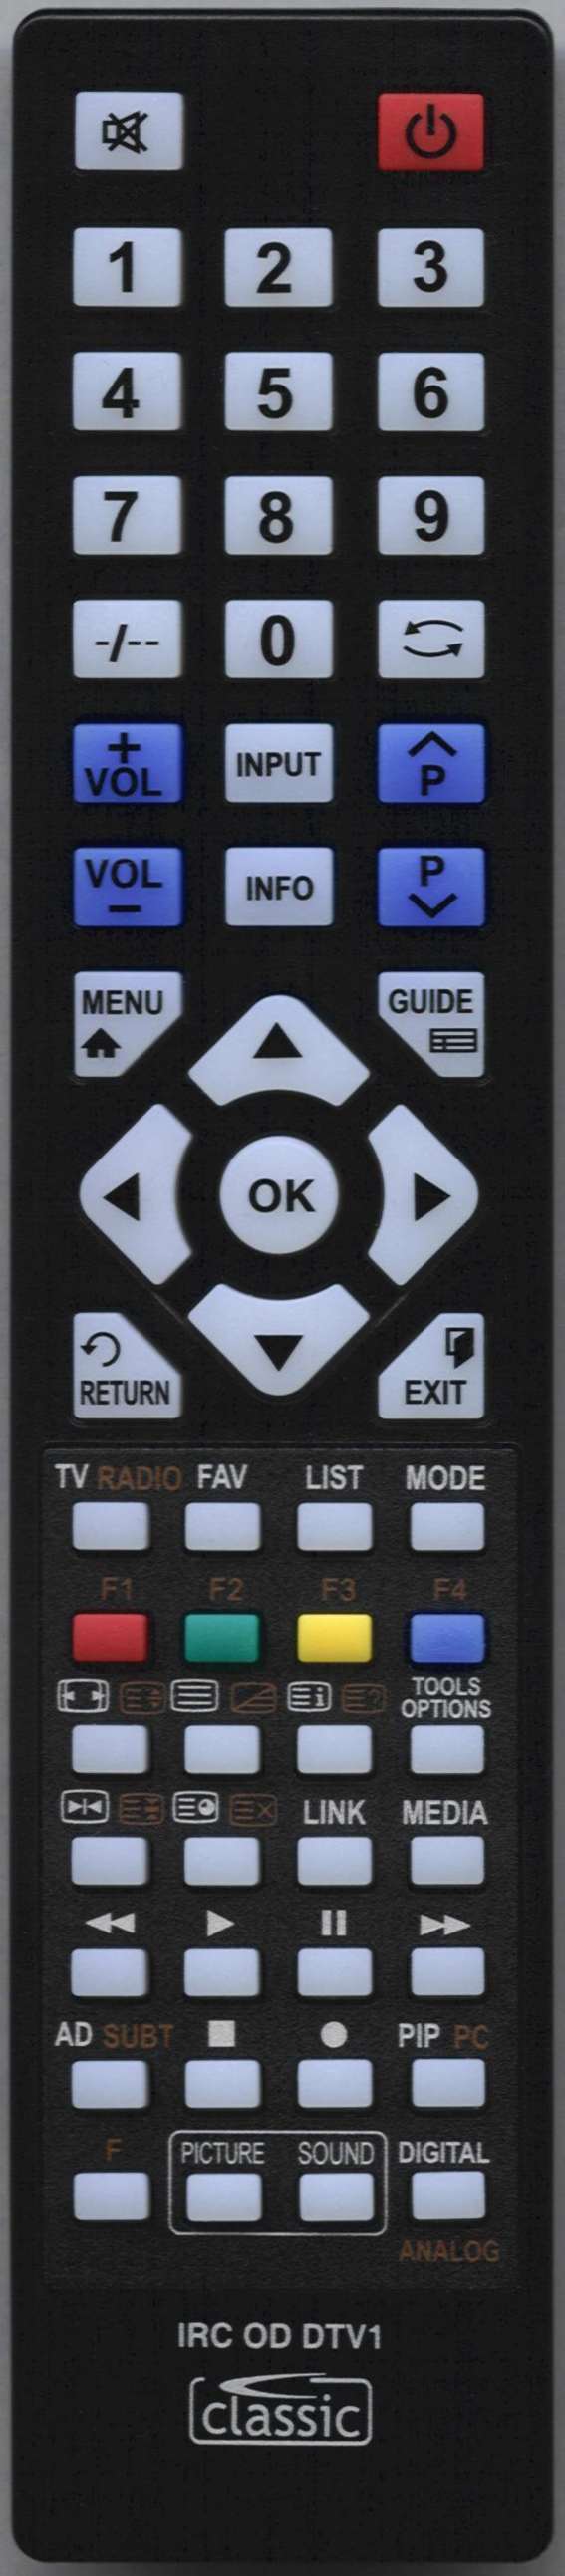 Orion CLB22B100 Remote Control